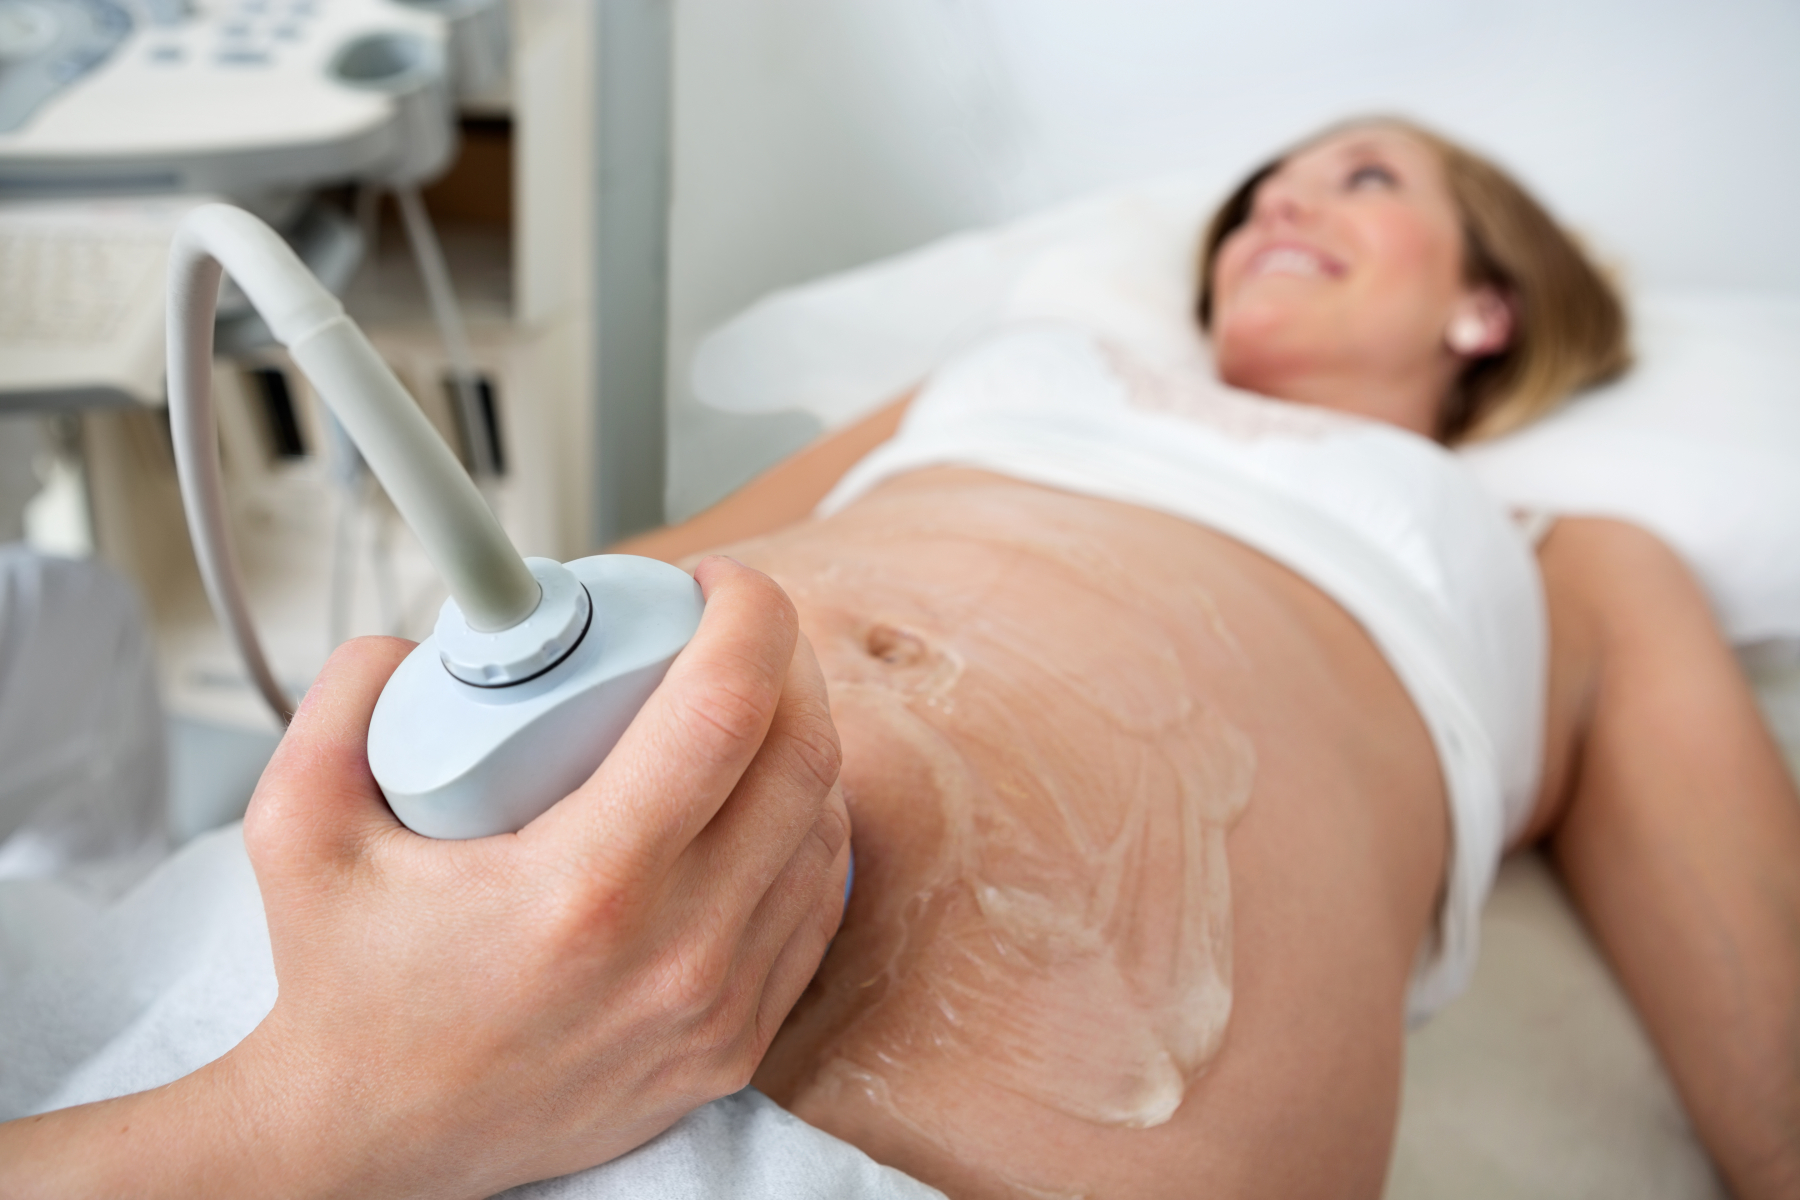 Young woman having an ultrasound examination